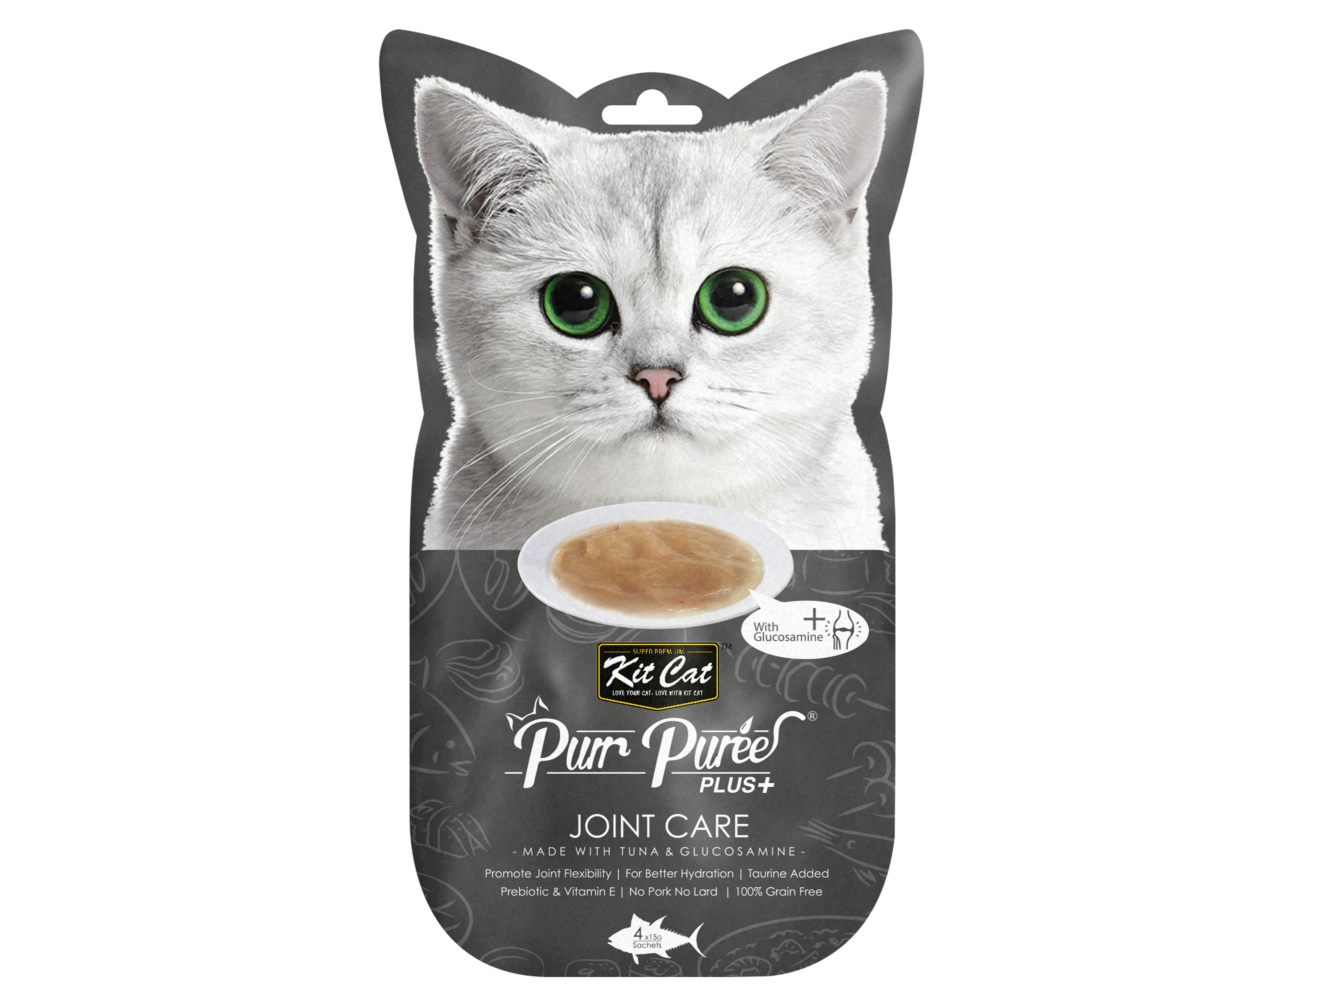 Kit Cat Purr Puree Plus+ Joint Care 4x15g (Tuna)